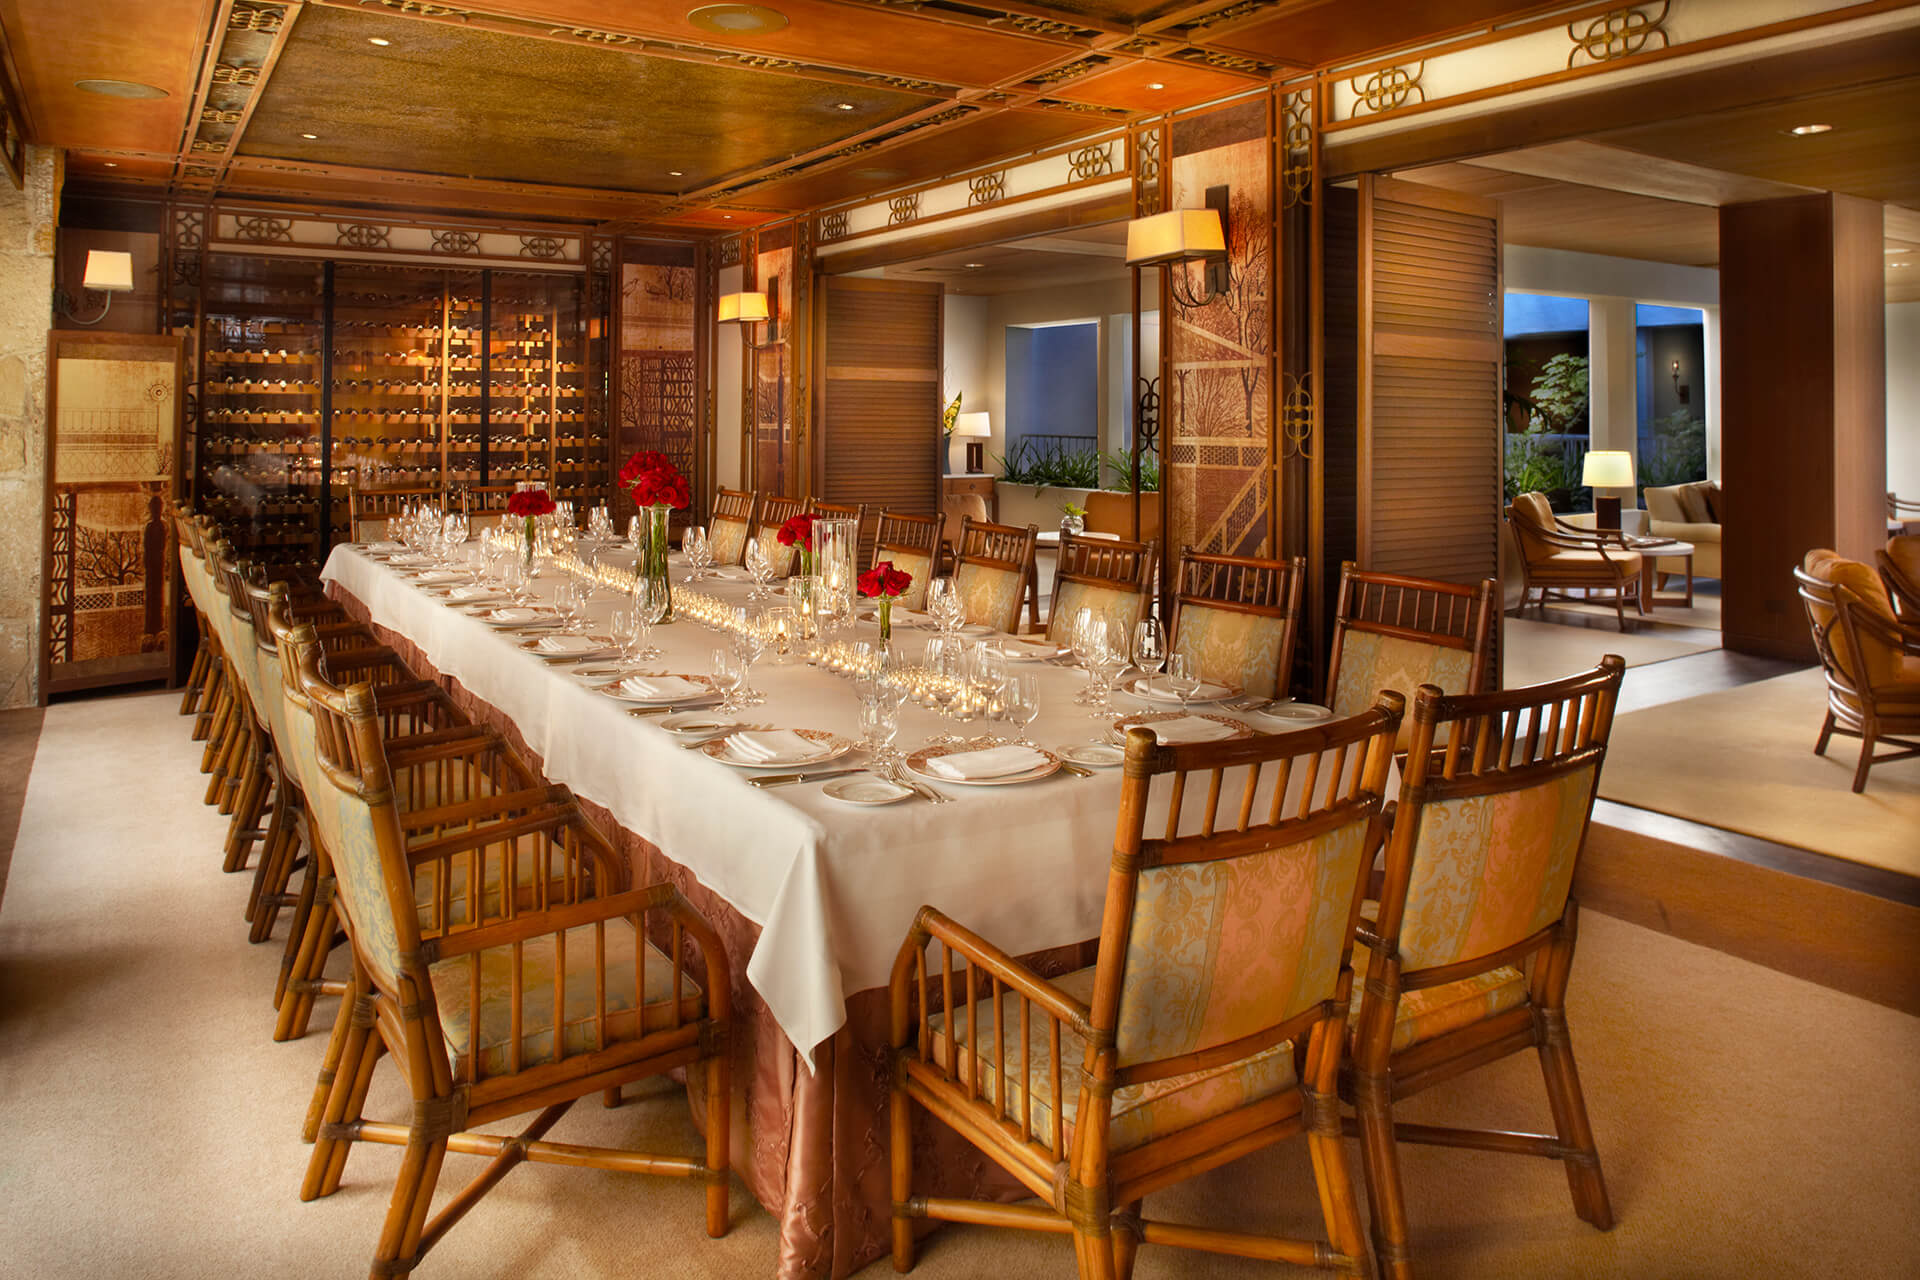 Halekulani Hotel brings serenity and elegance in the midst of Waikiki